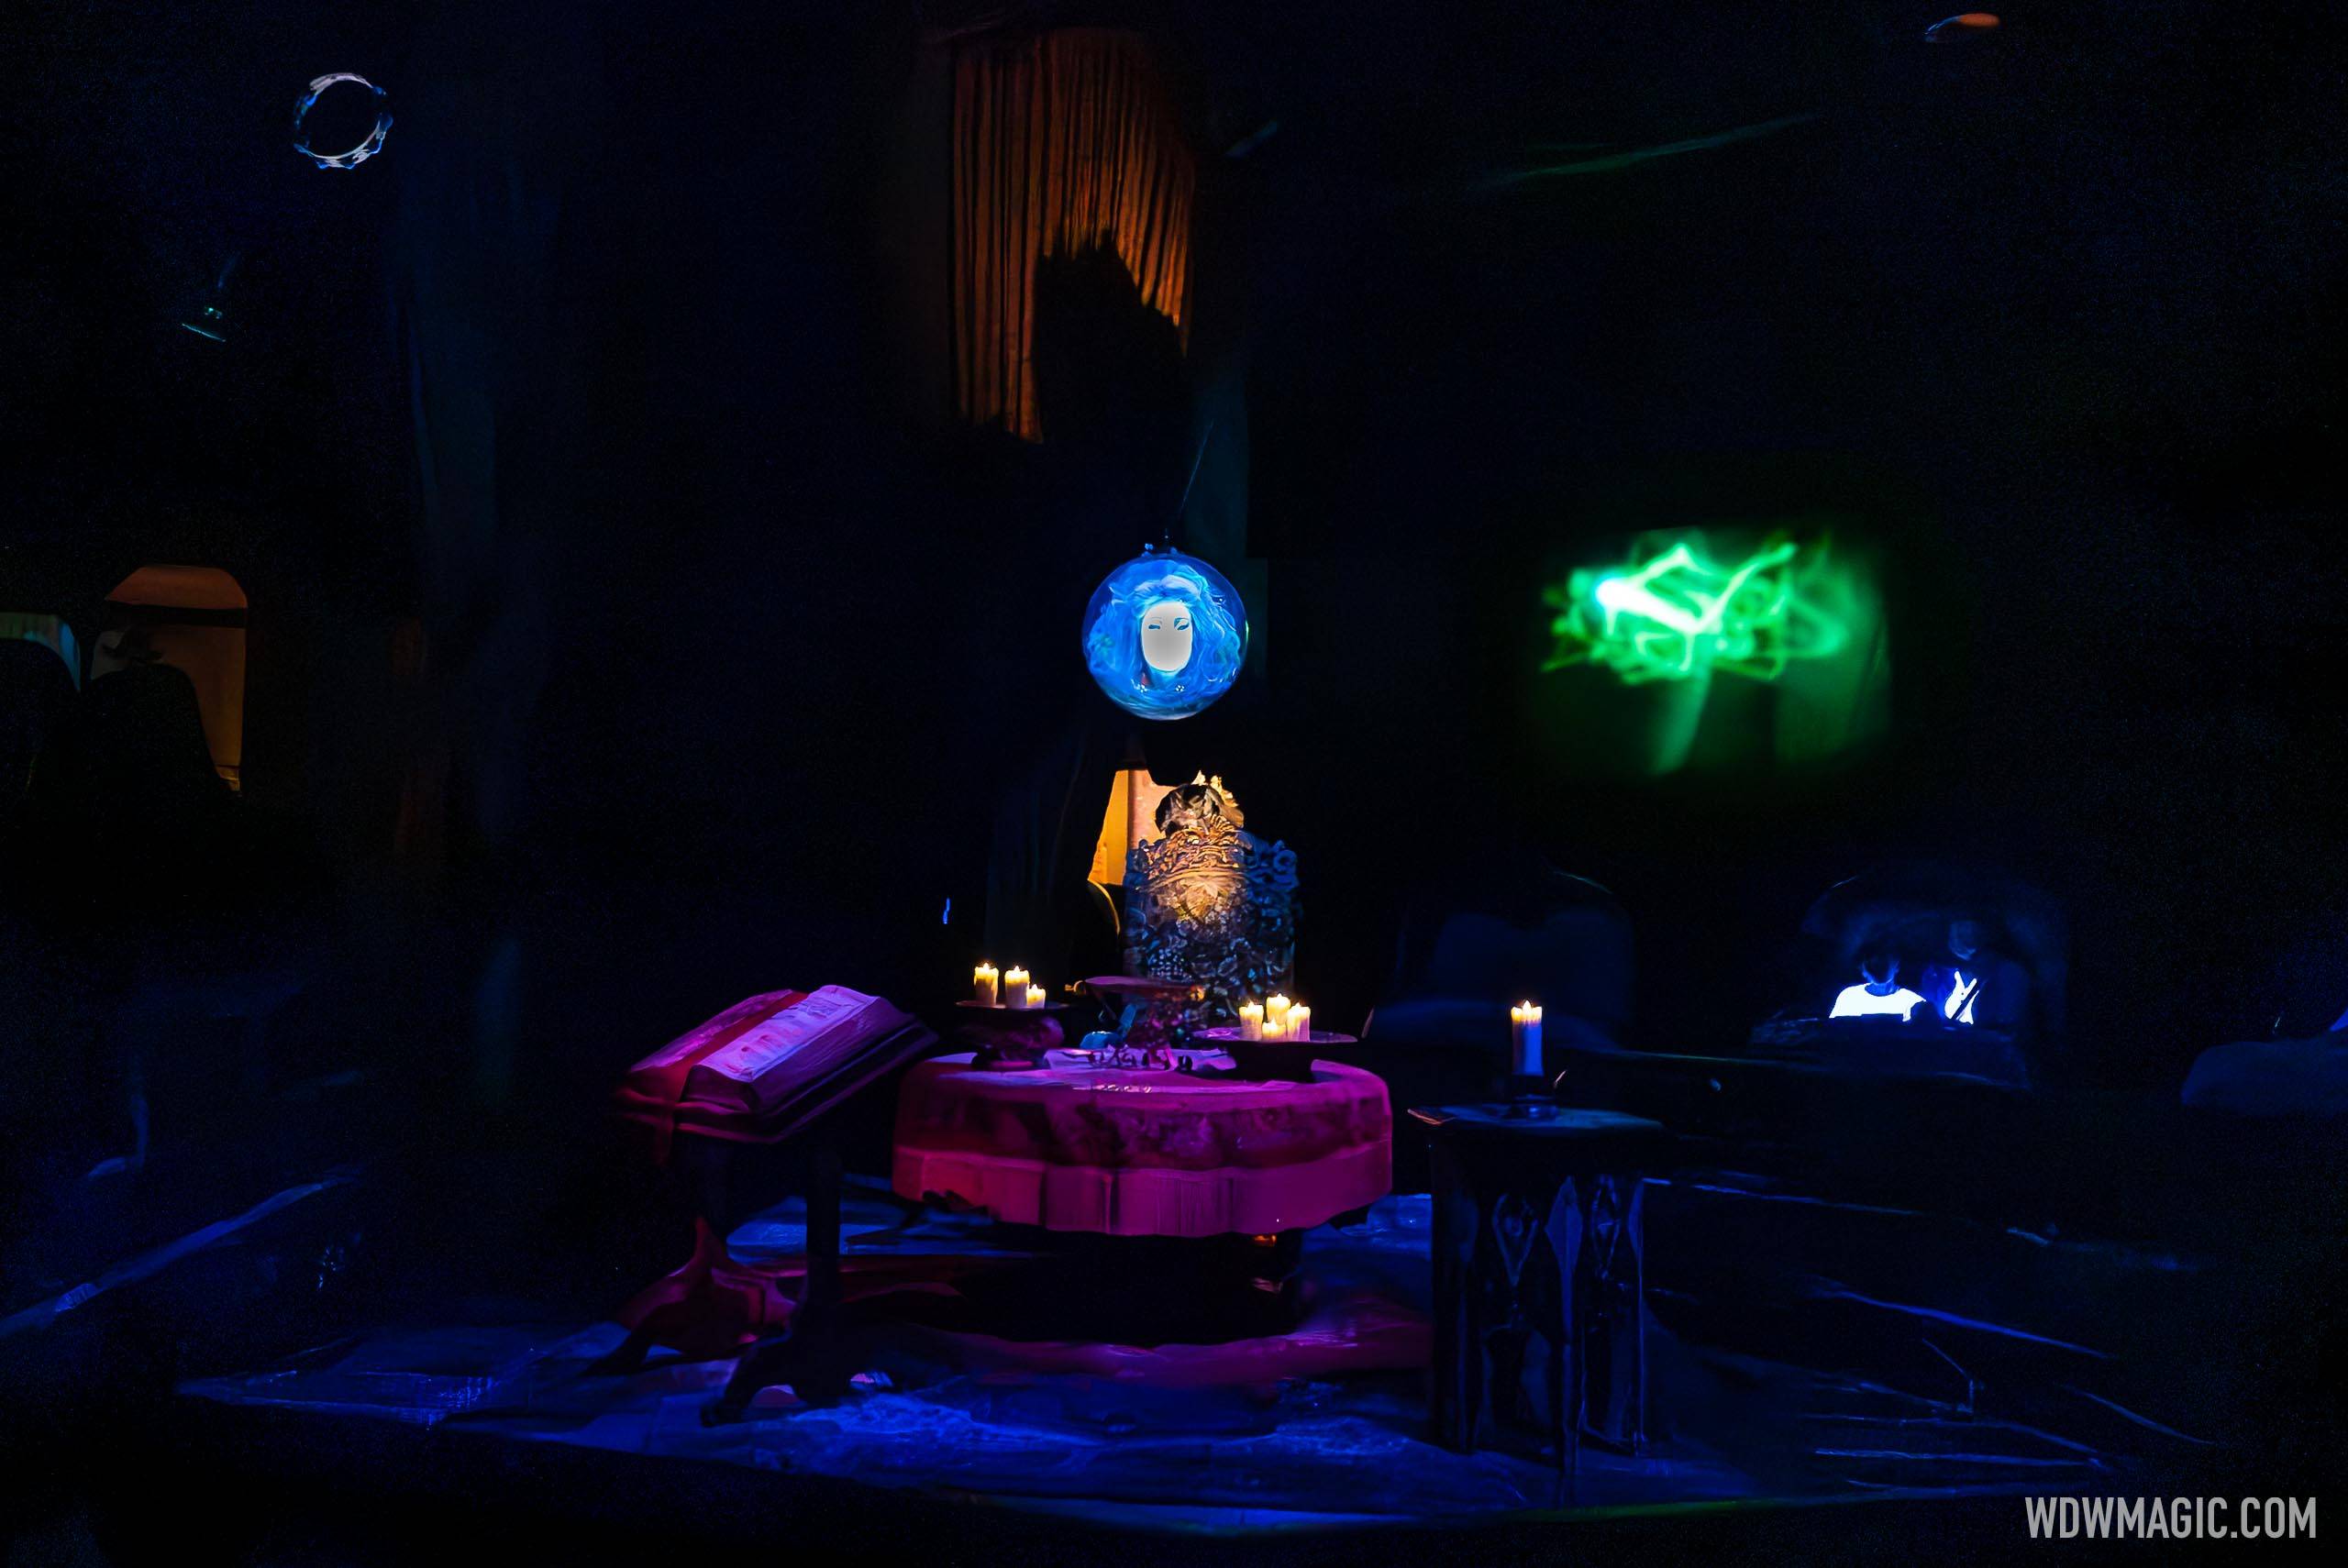 VIDEO - Imagineer Jason Surrell's Haunted Mansion presentation from the Disney Parks Blog meet last night